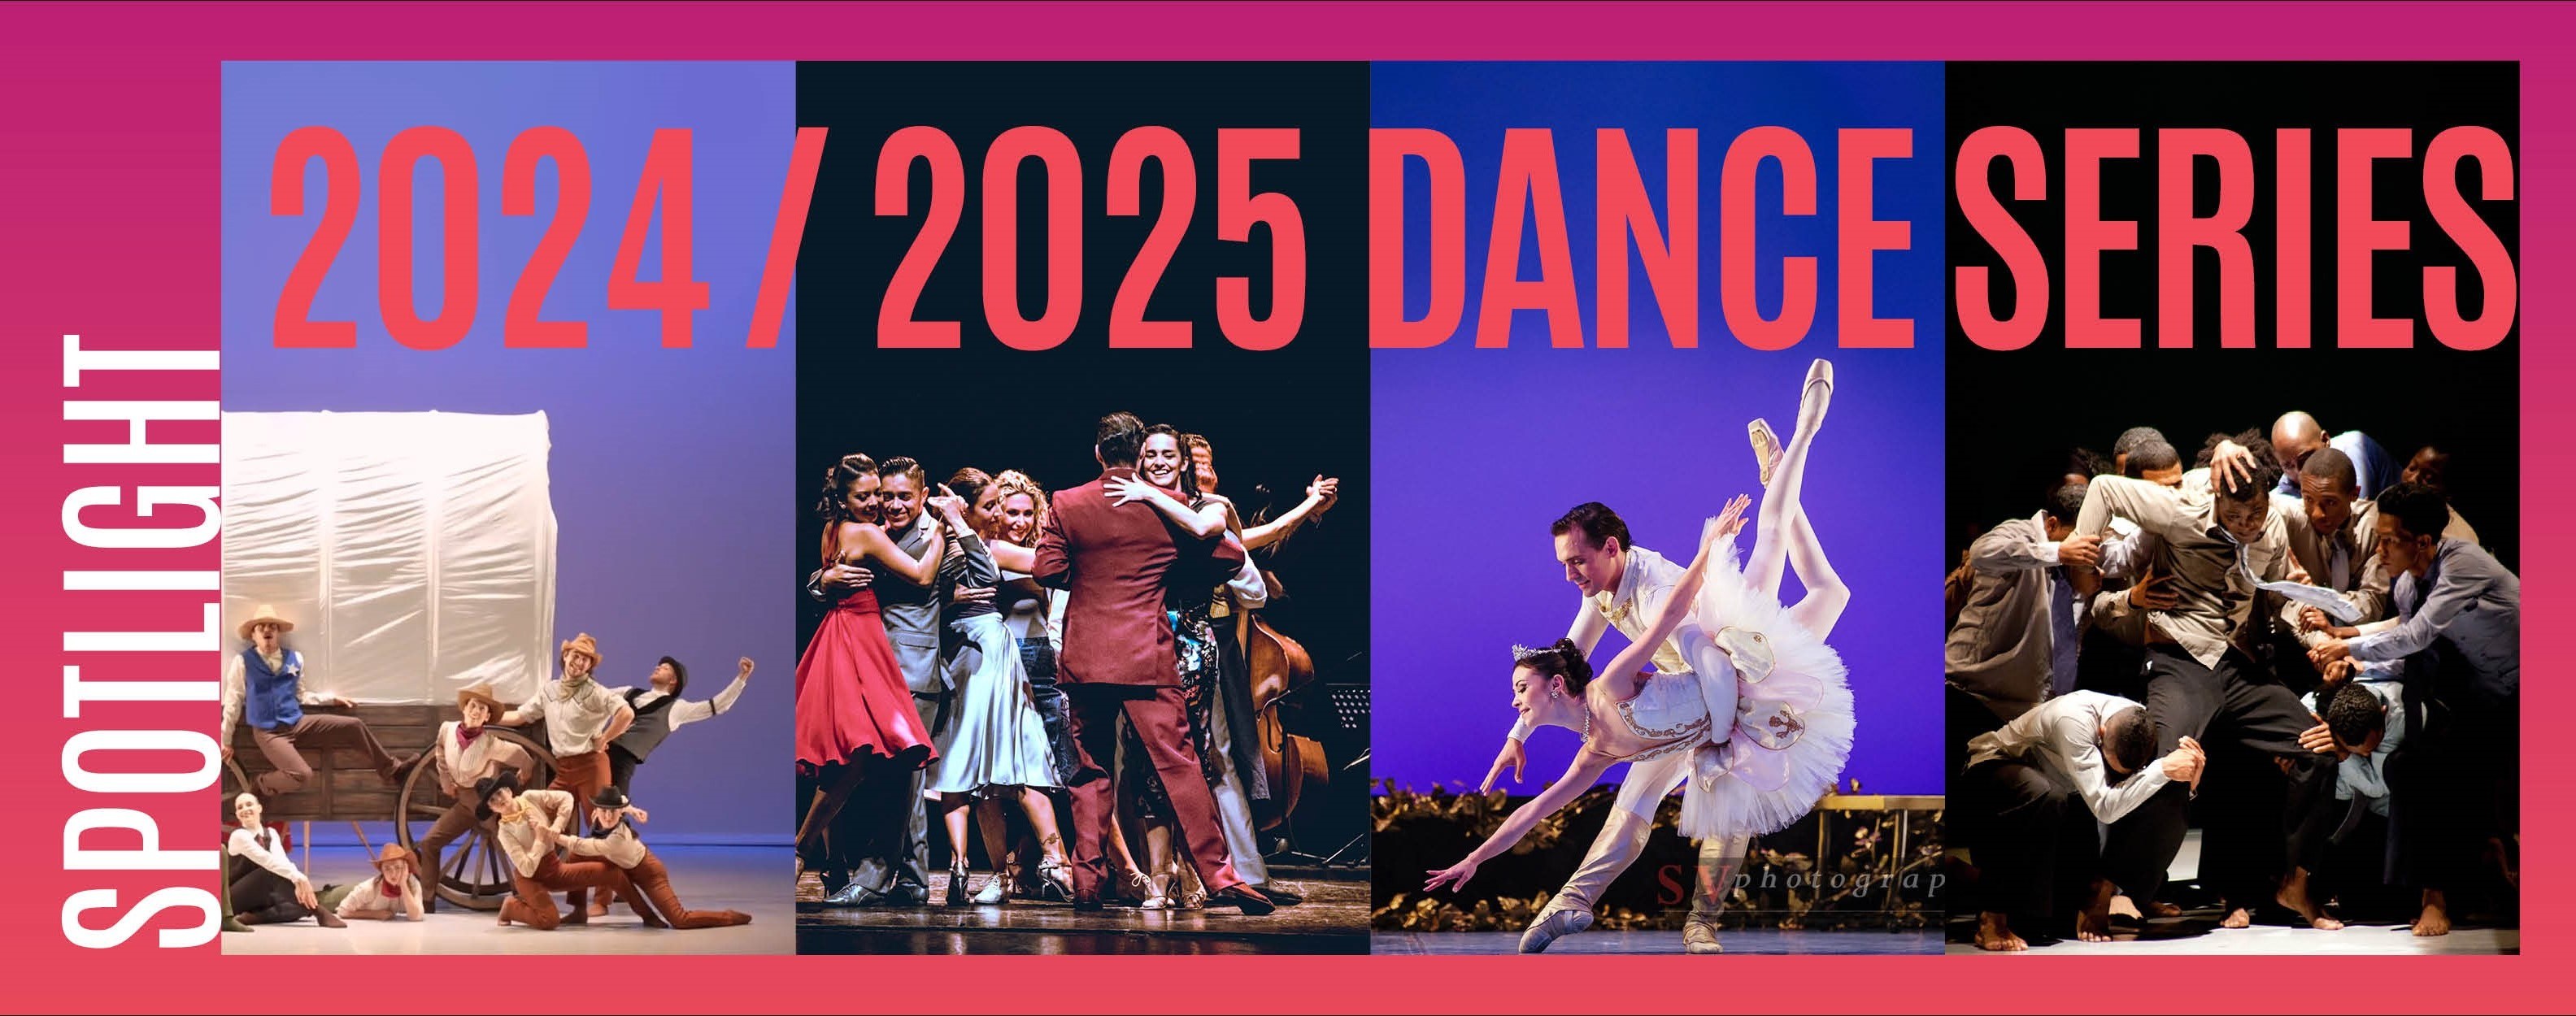 Dance Series Banner 2024 2025 A